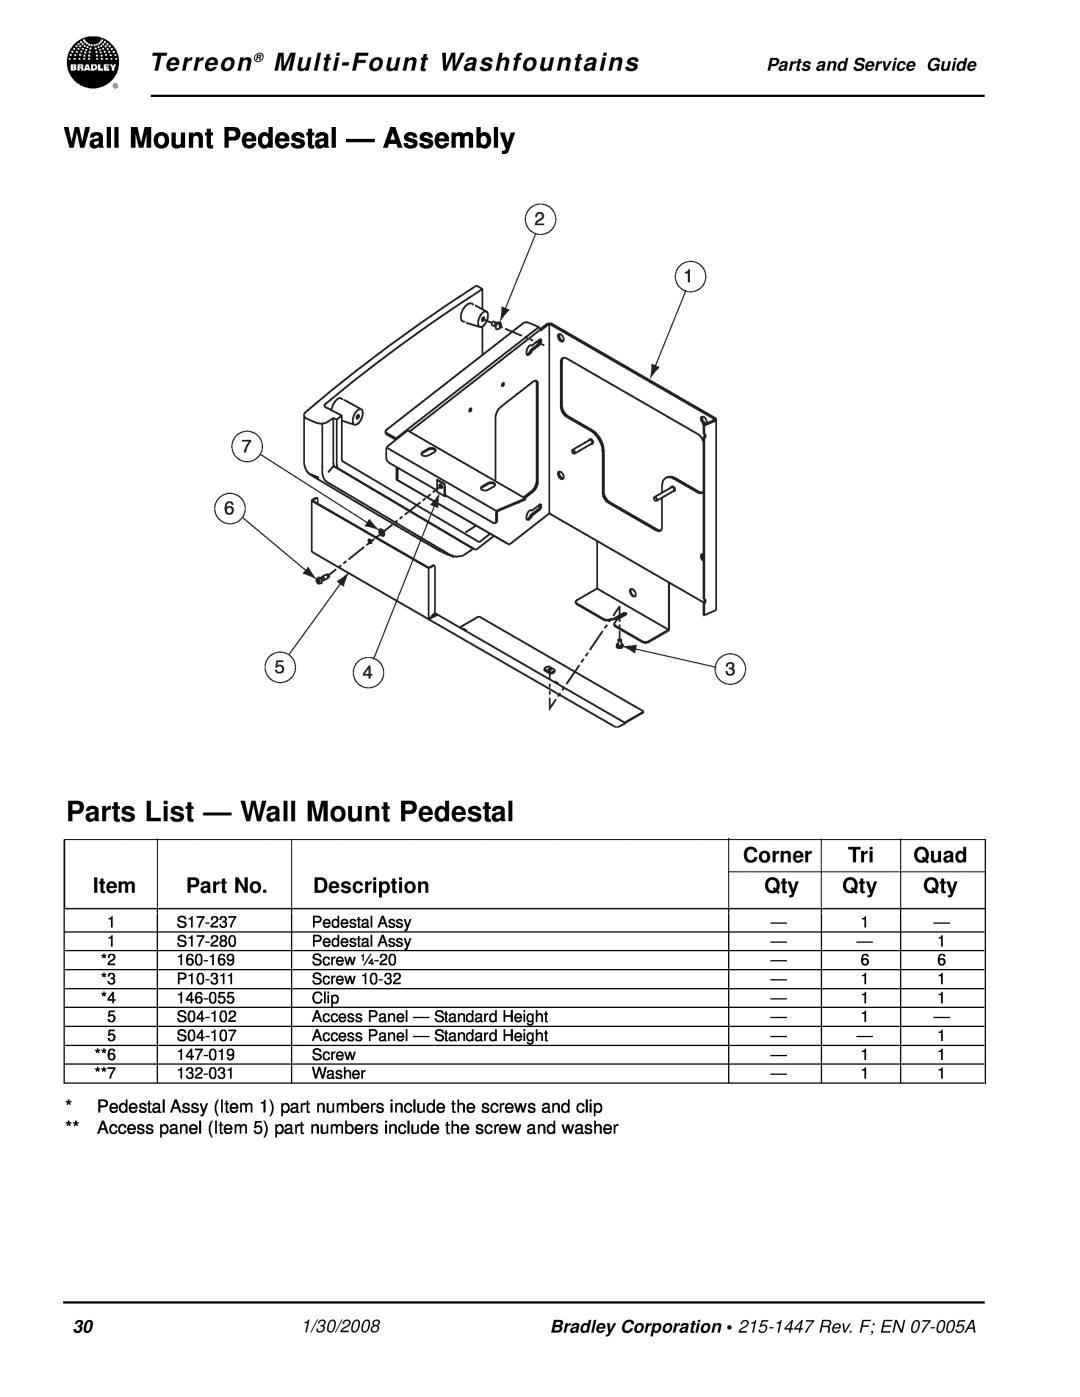 Bradley Smoker Indoor Furnishings Wall Mount Pedestal - Assembly, Parts List - Wall Mount Pedestal, Description, Corner 